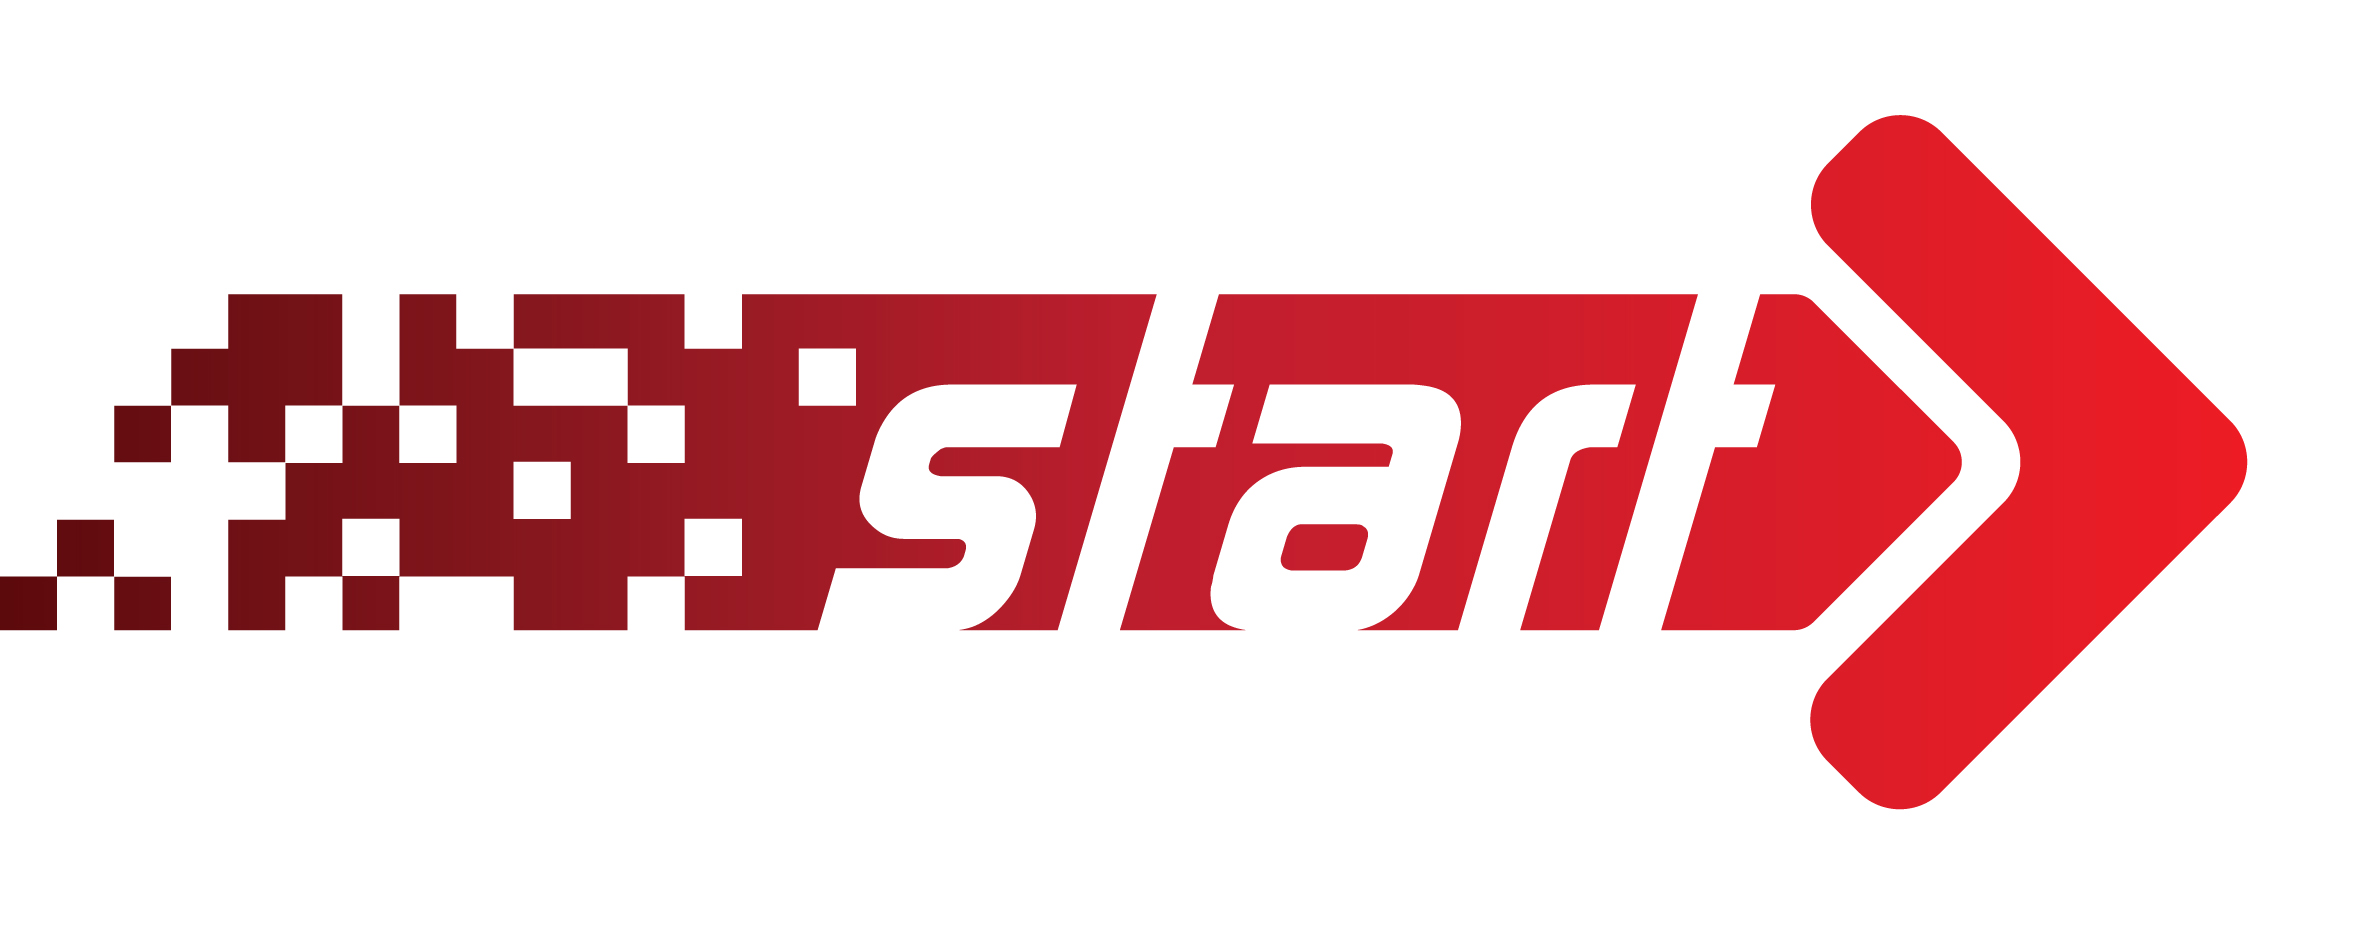 General start. Start логотип. Надпись старт. Autostart логотип. Start вектор.